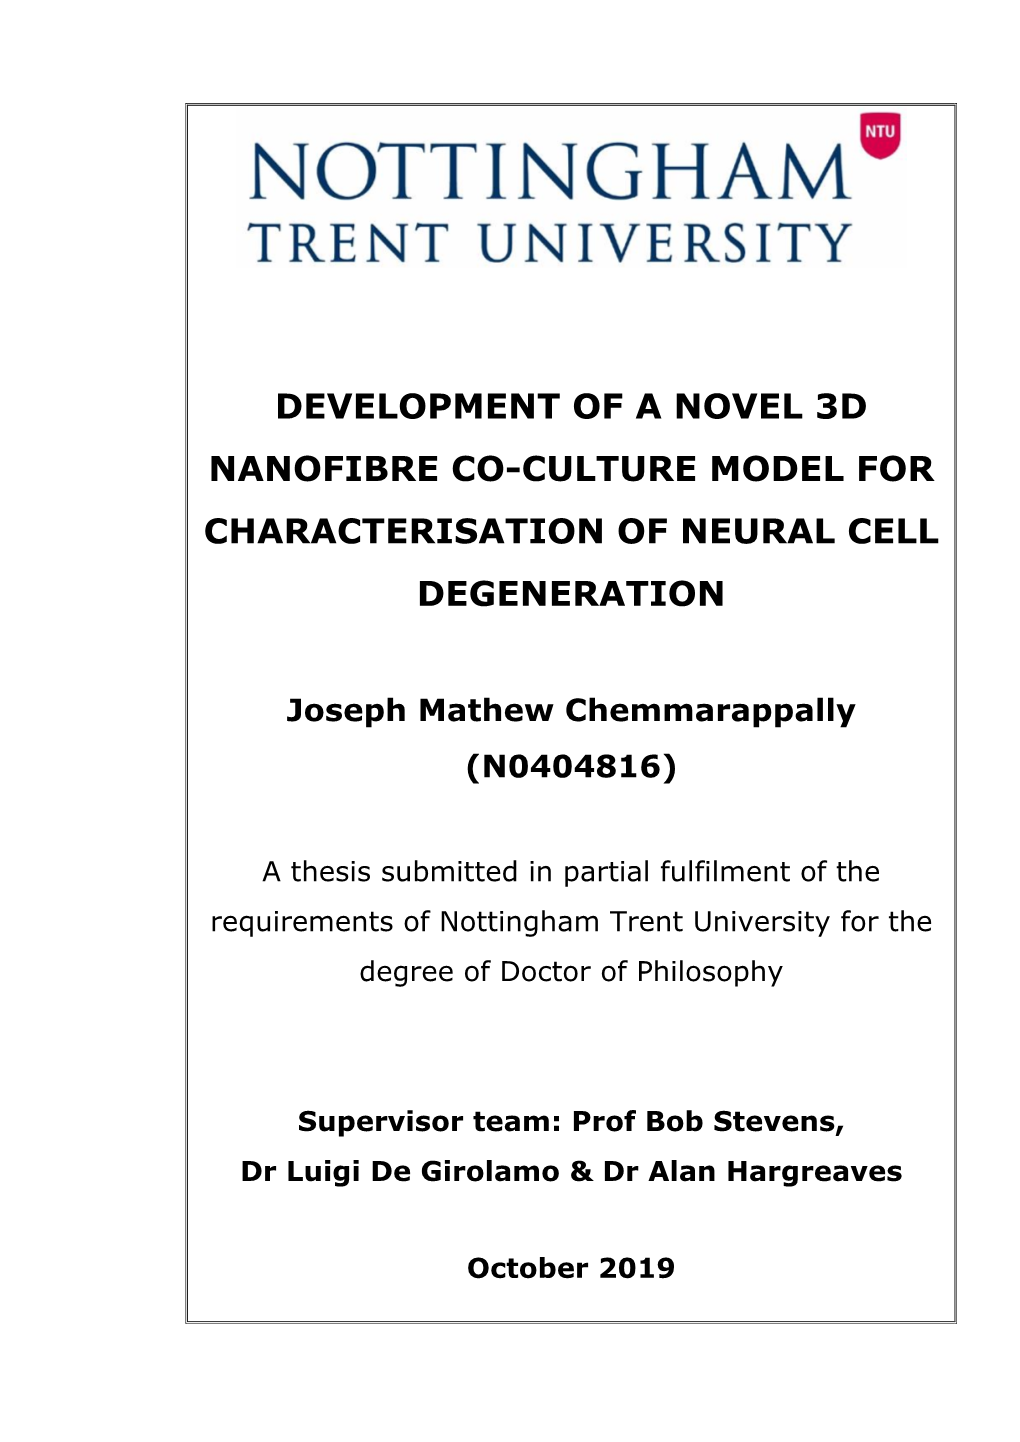 Development of a Novel 3D Nanofibre Co-Culture Model for Characterisation of Neural Cell Degeneration